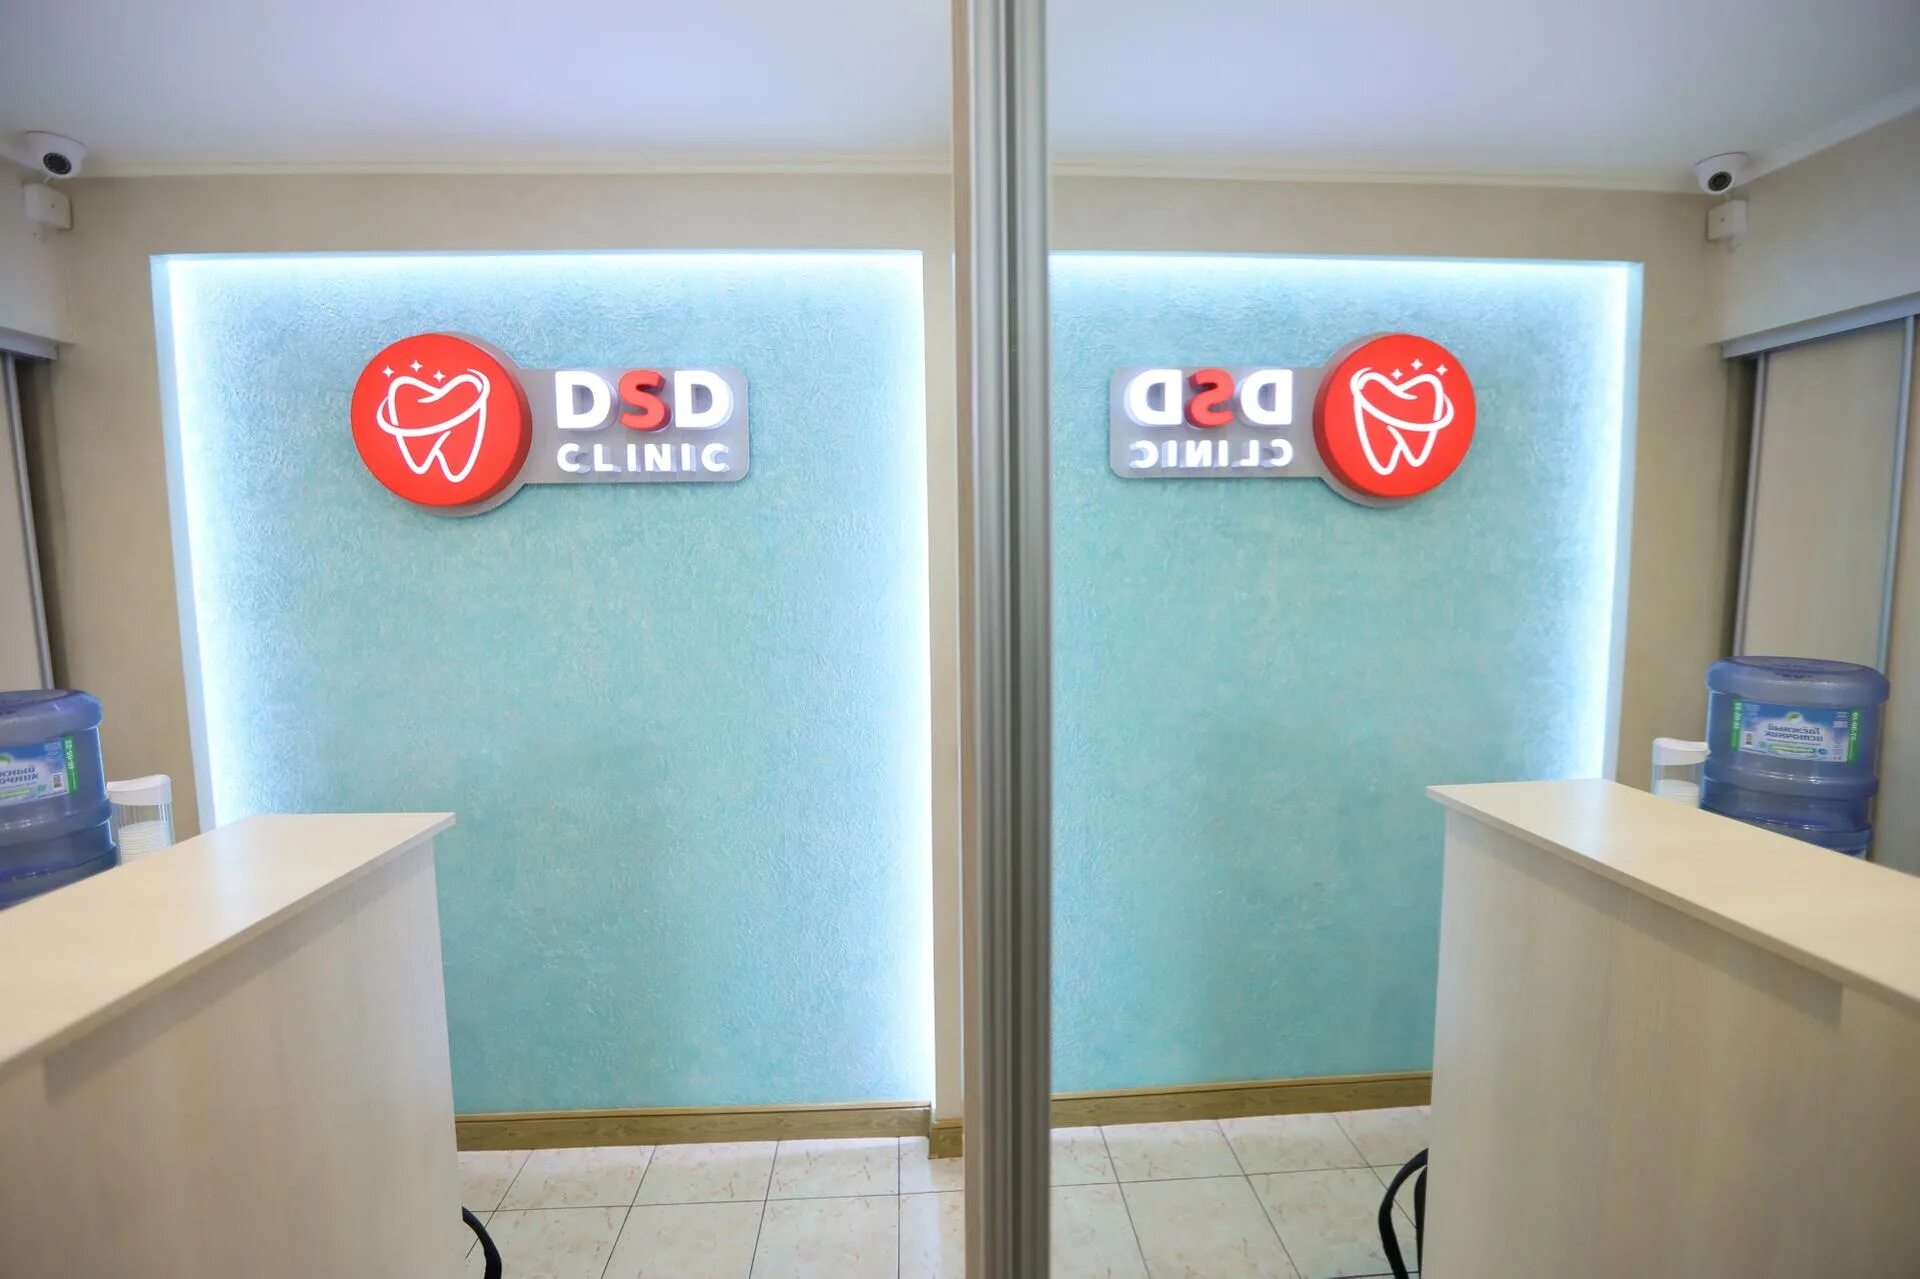 DSD Clinic Улан-Удэ. DSD Clinic Улан-Удэ Боевая 12. Арт клиник Улан Удэ логотип. Сиб клиник Улан Удэ.